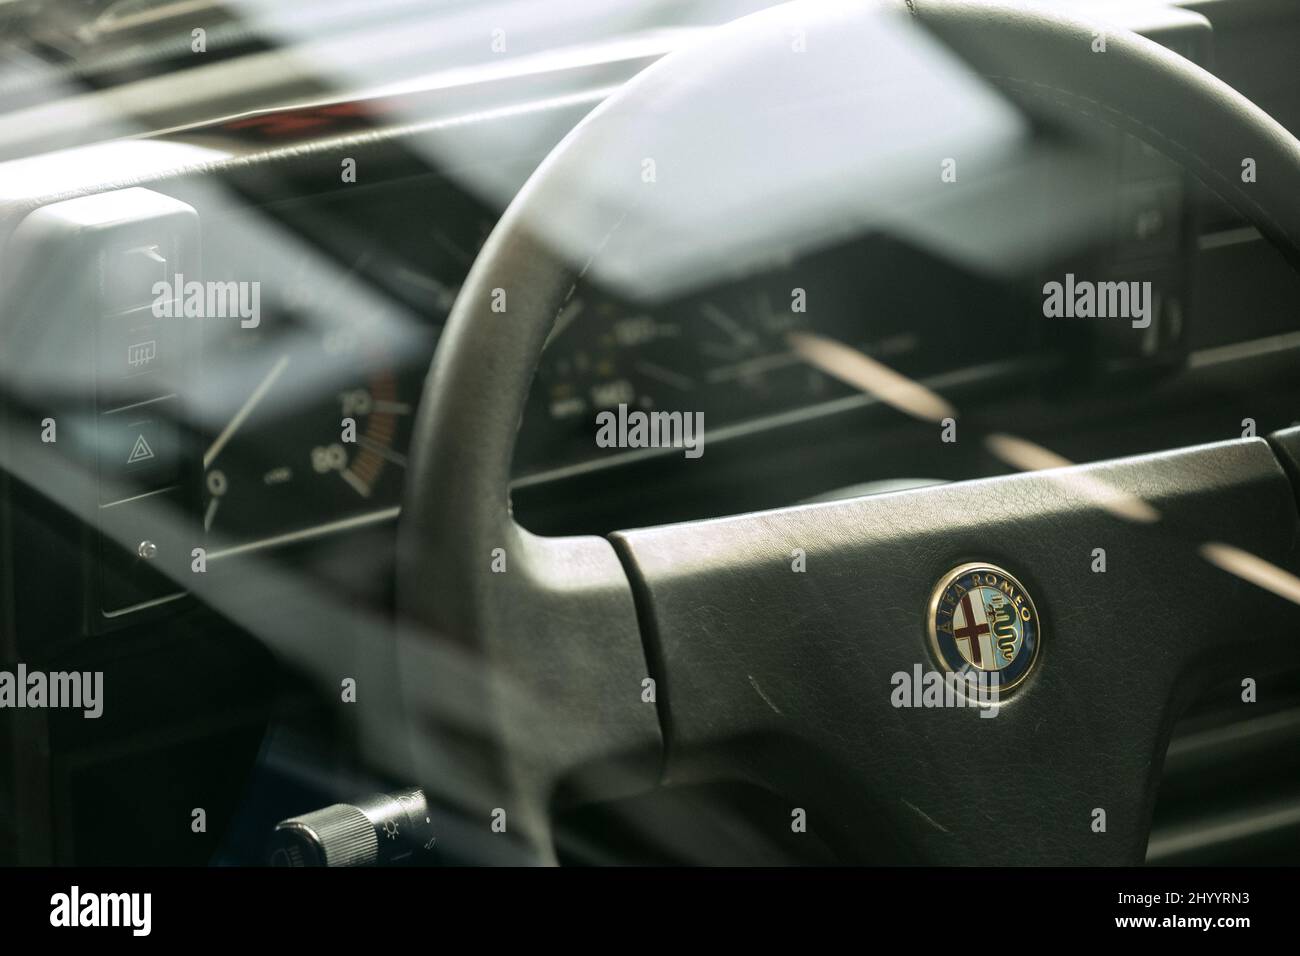 Alfa Romeo 155 Steering Wheel Through the window Stock Photo